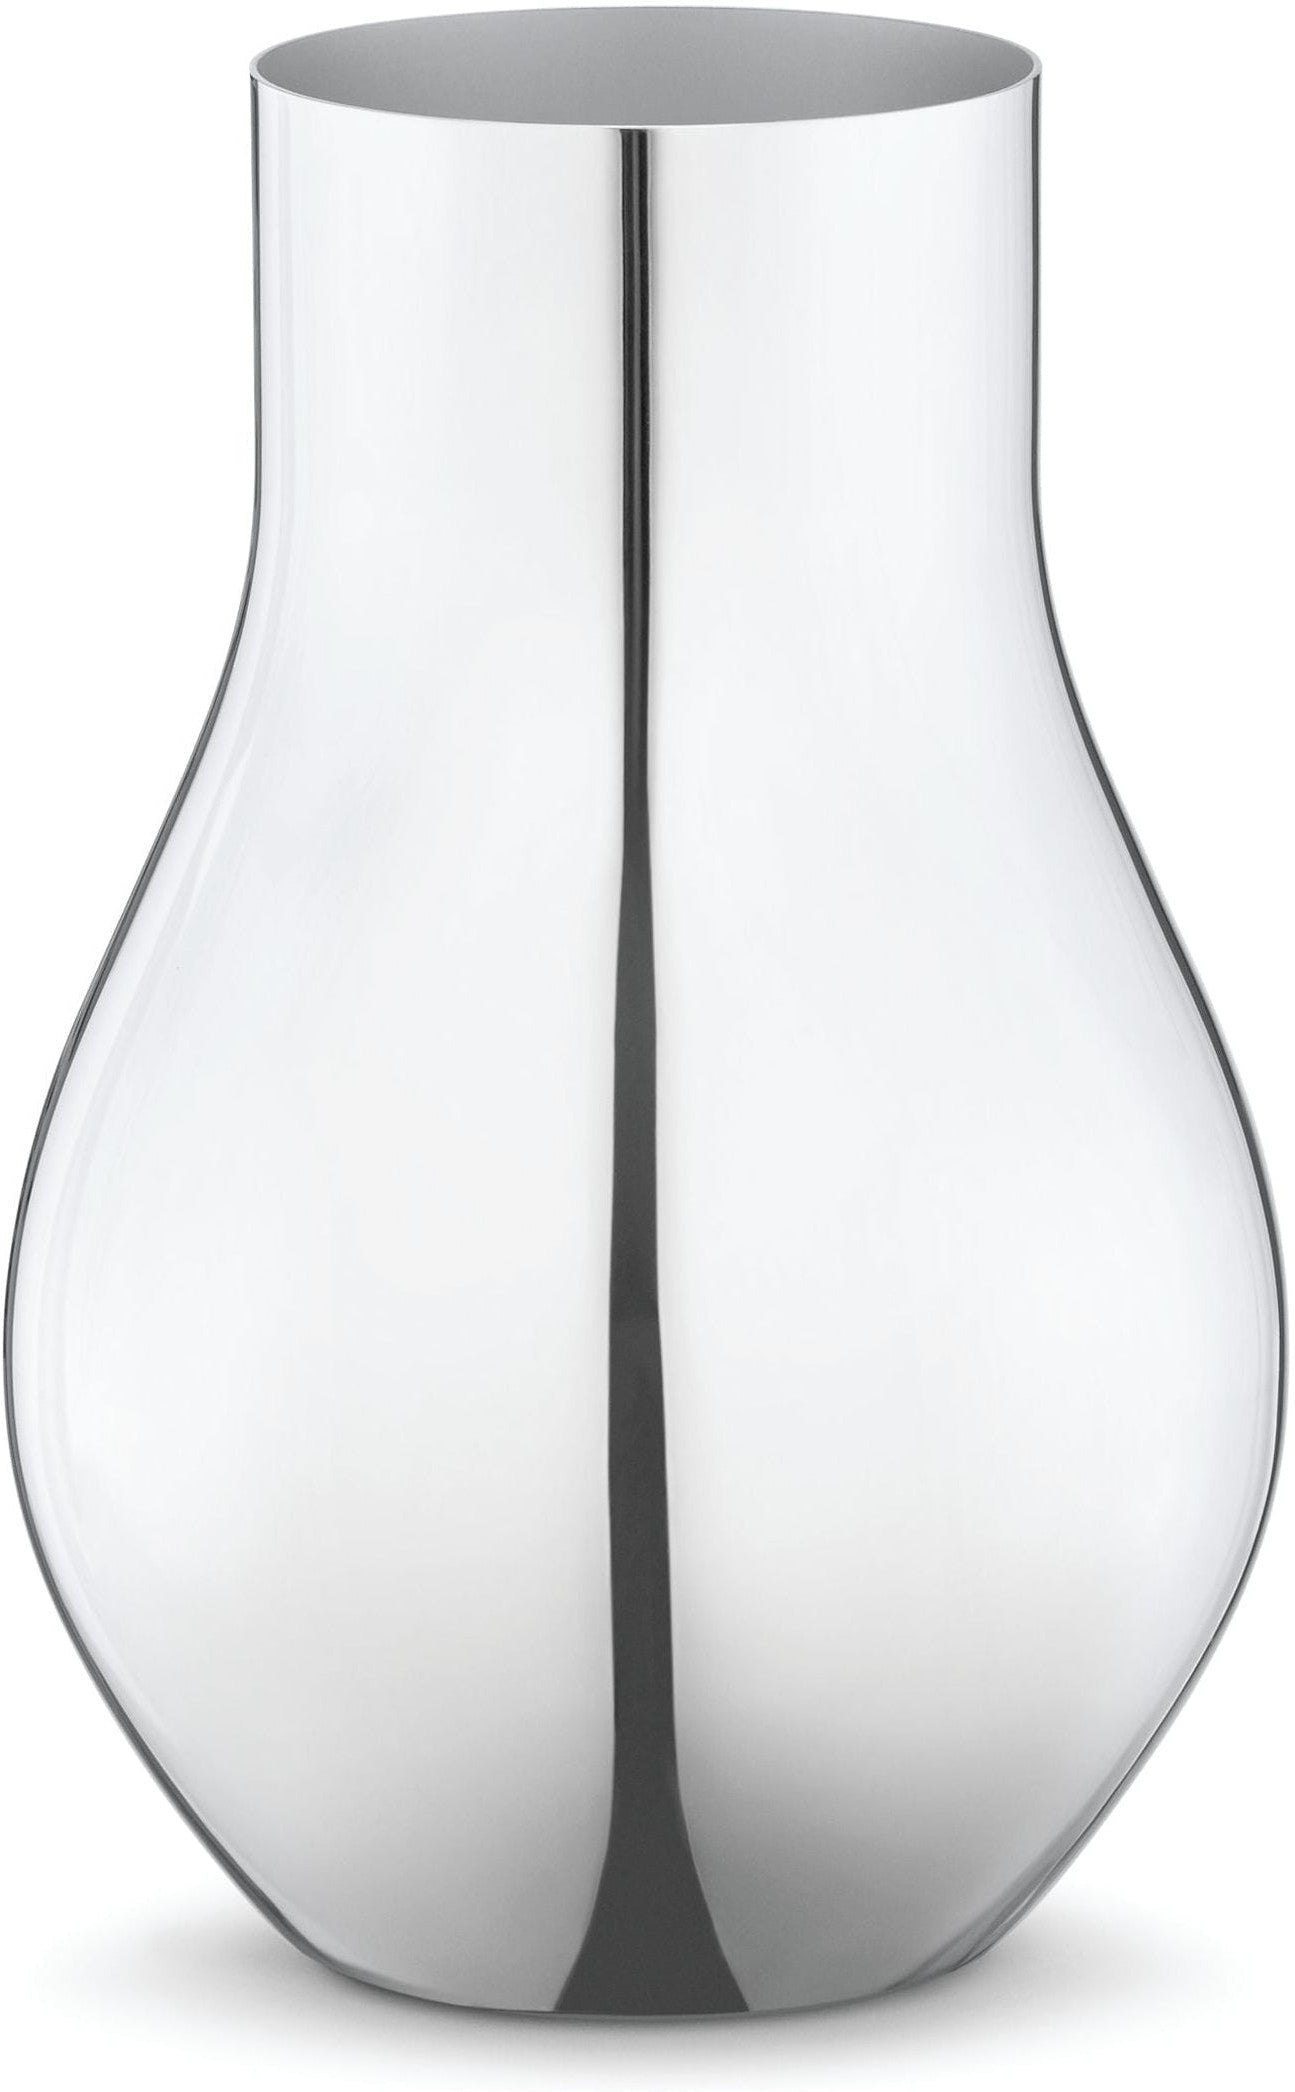 Georg Jensen Cafu Vase rostfritt stål, 22 cm